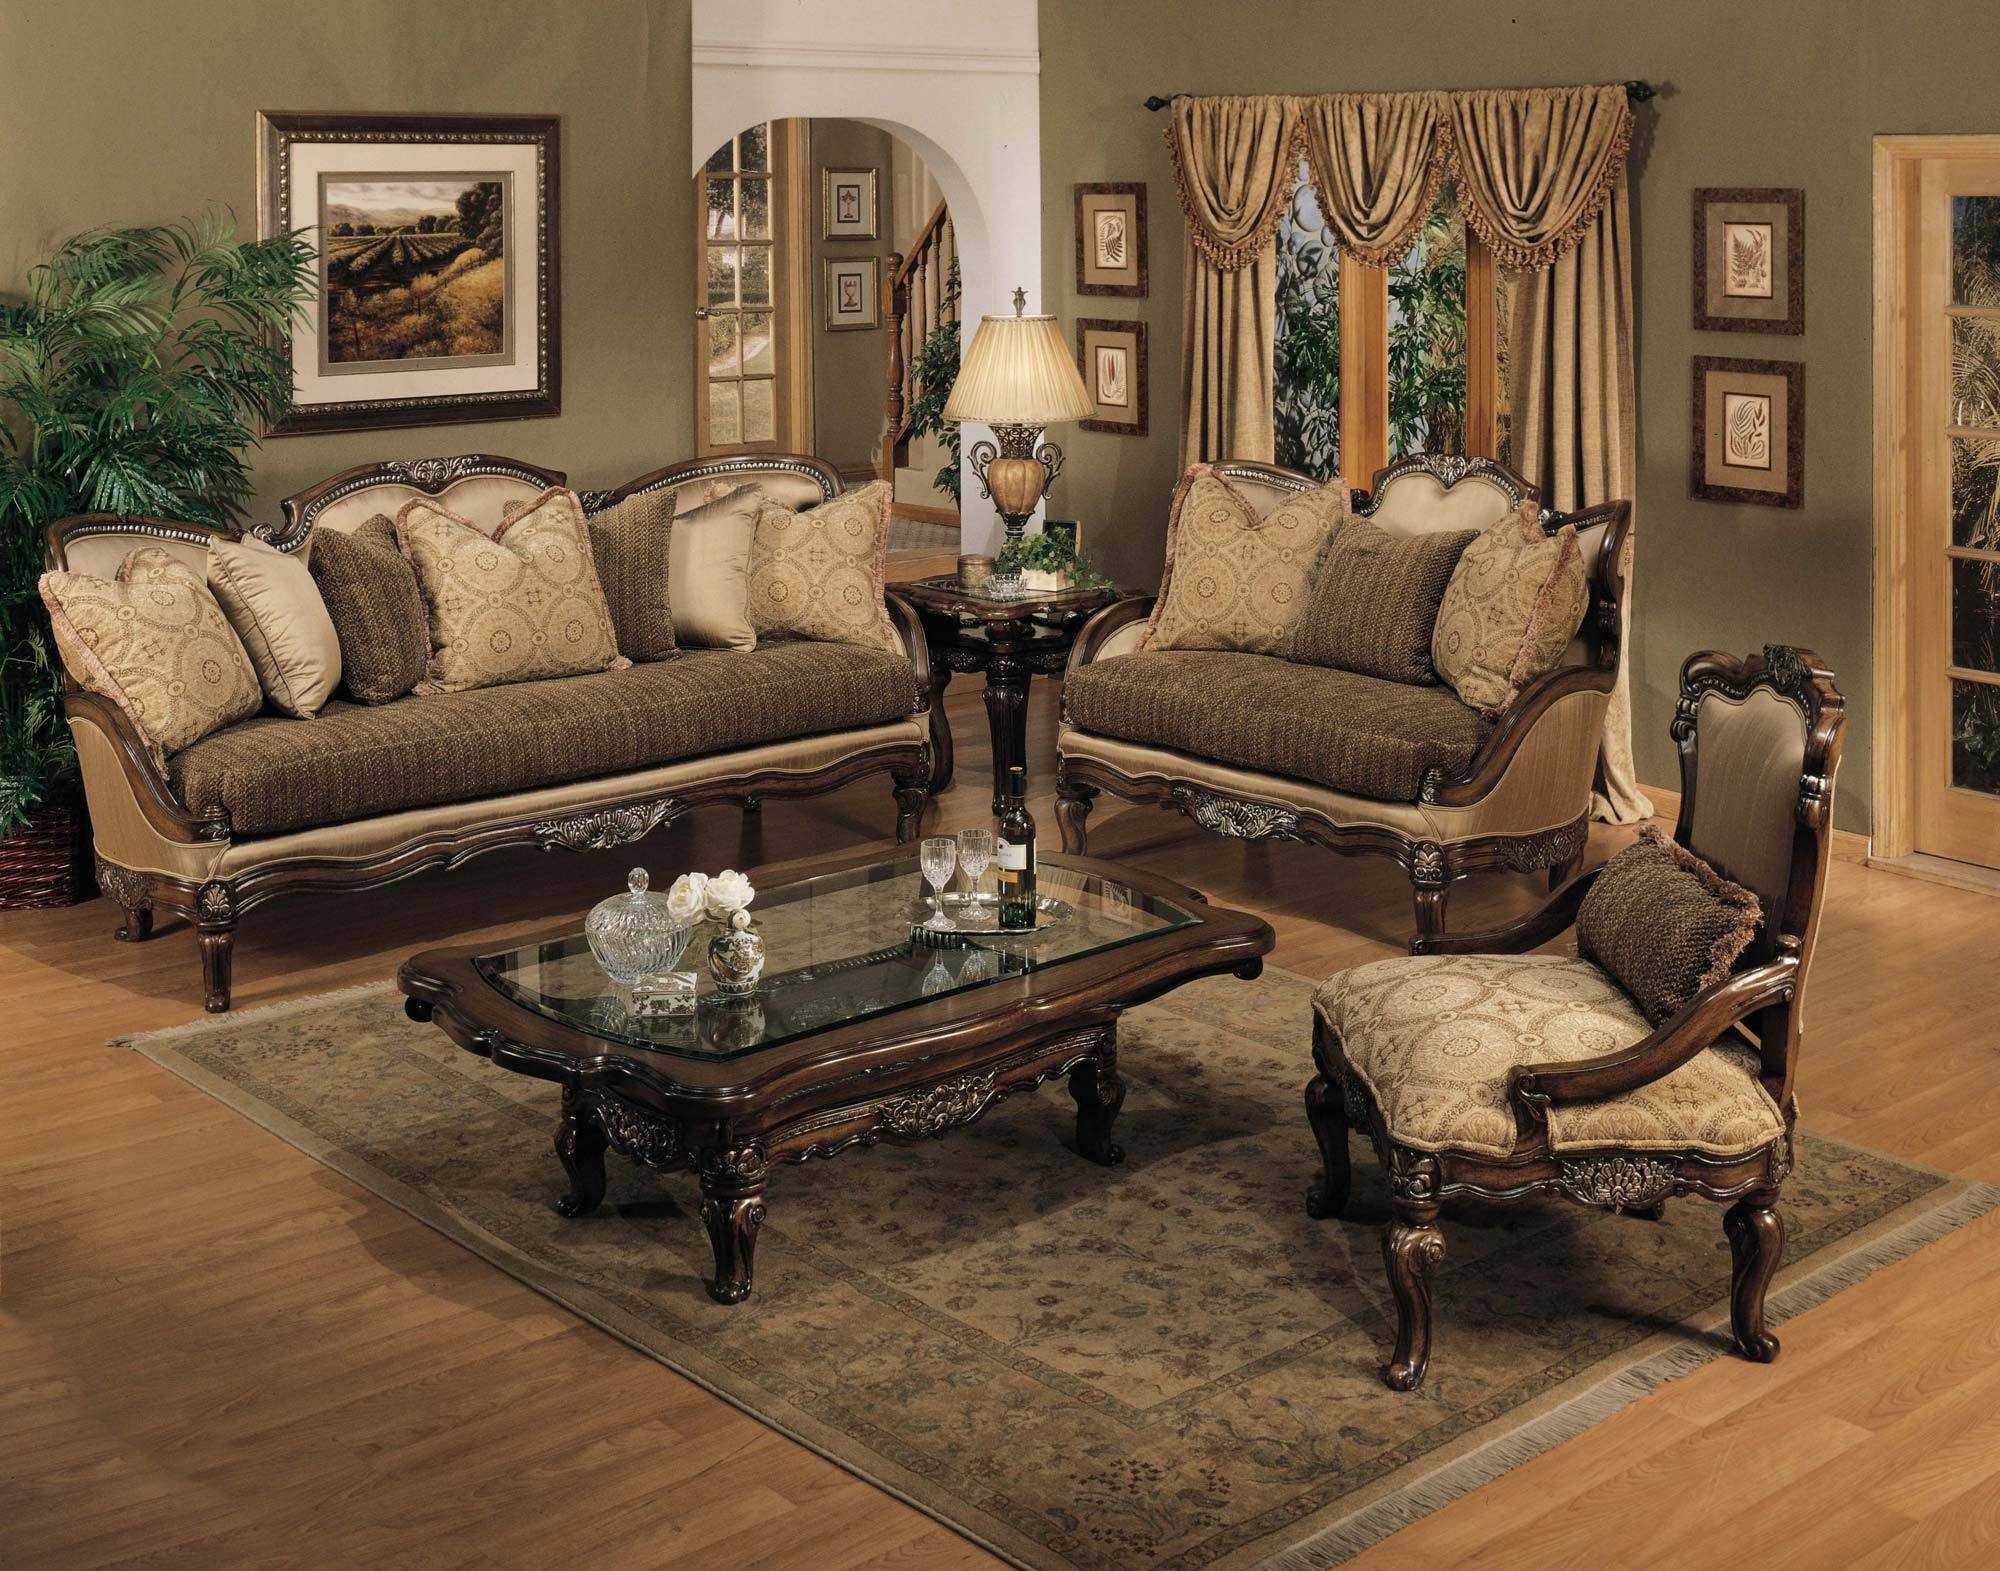 image of elegant living room